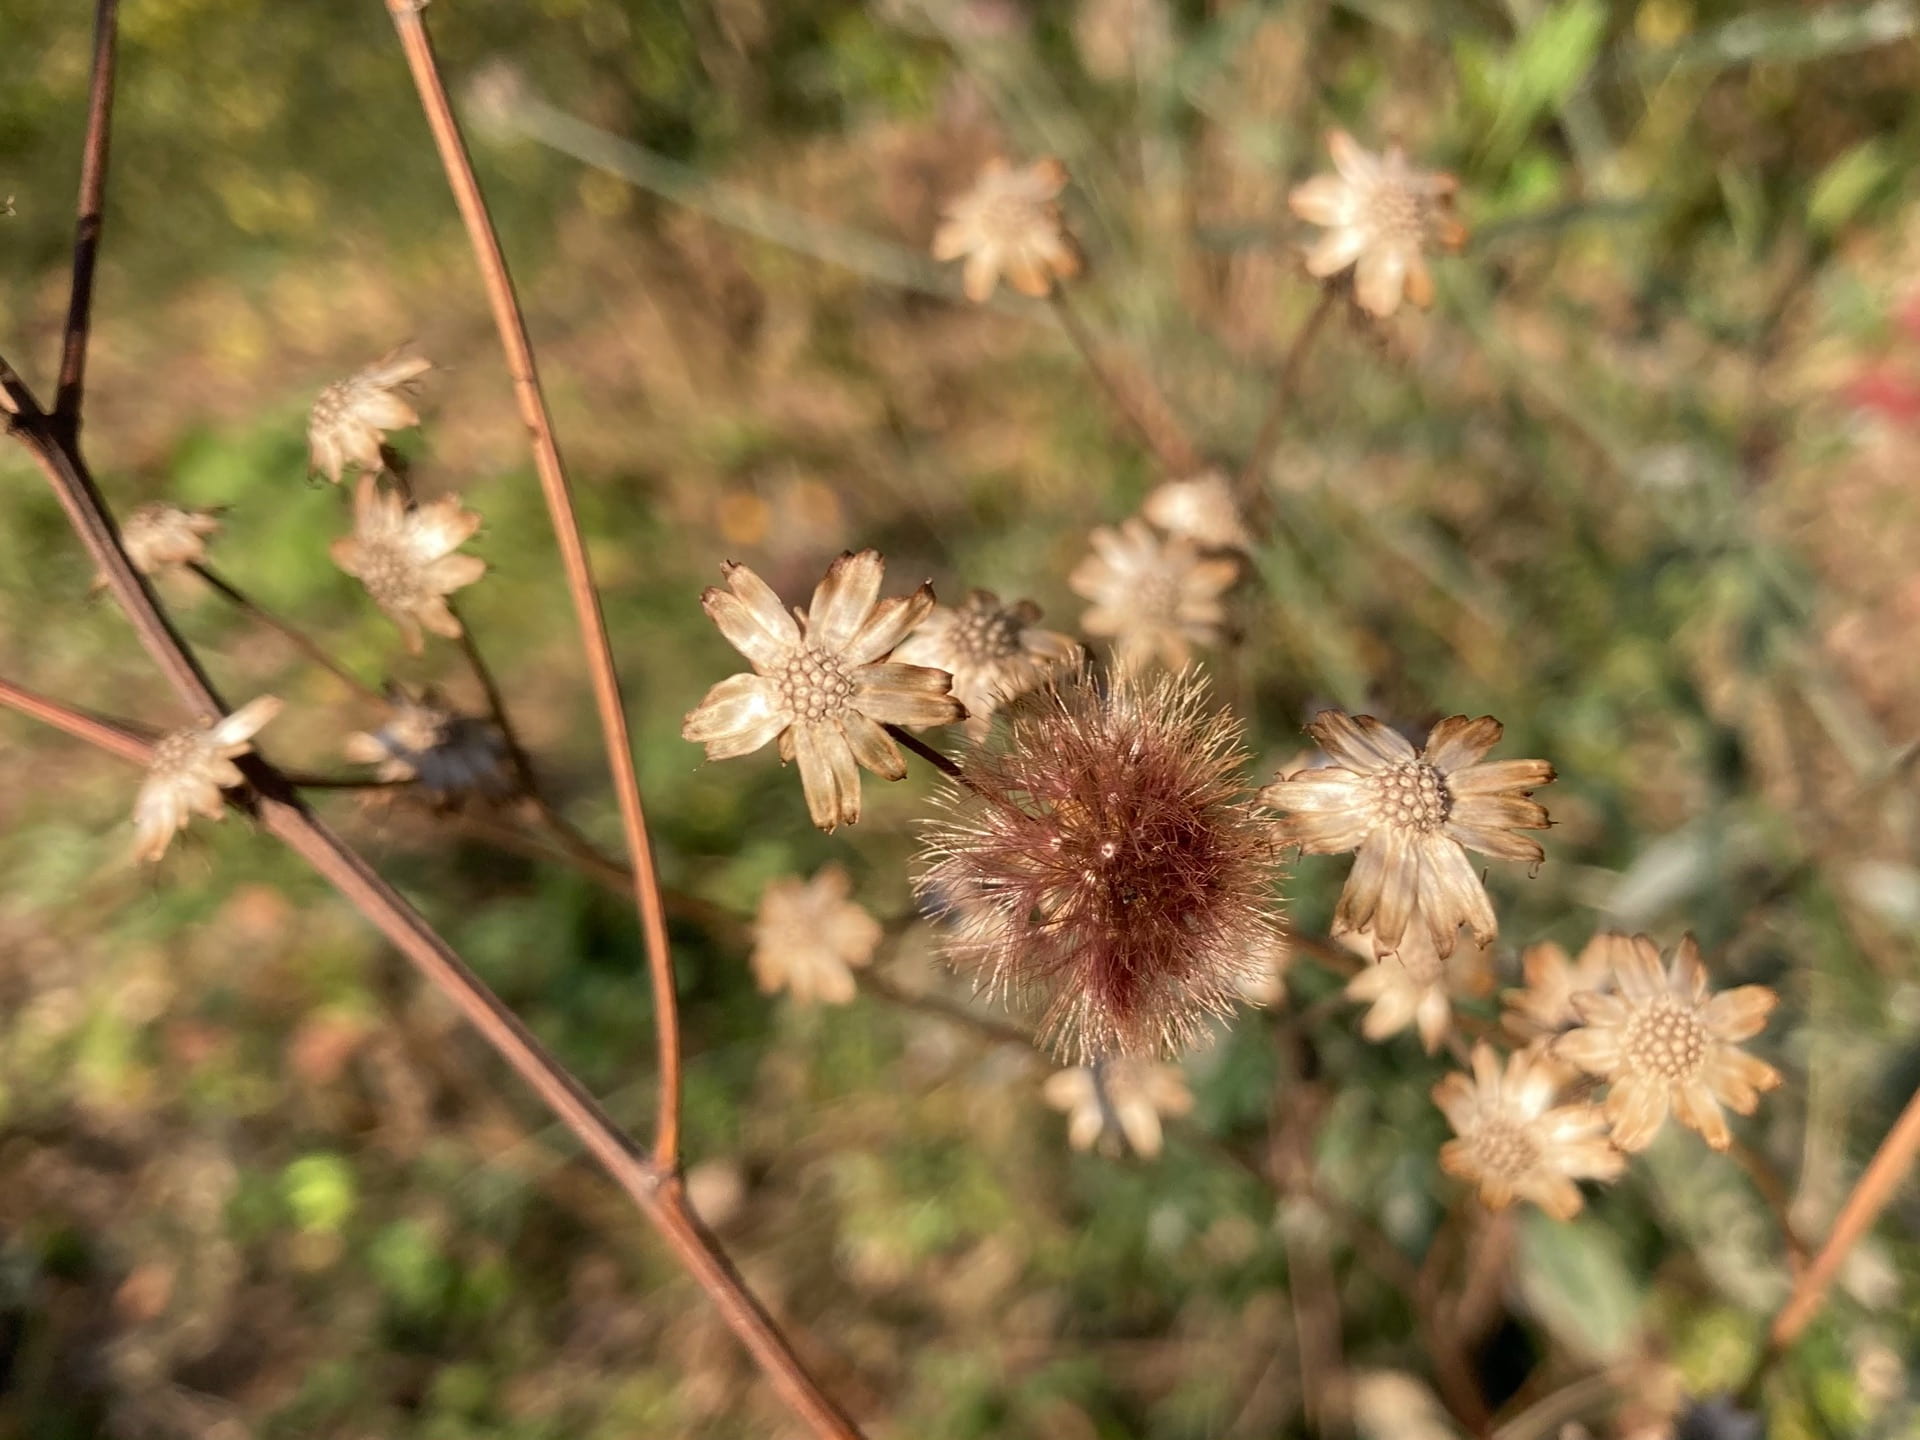 The seed heads of Vernonia noveboracensis look like small brown flowers.